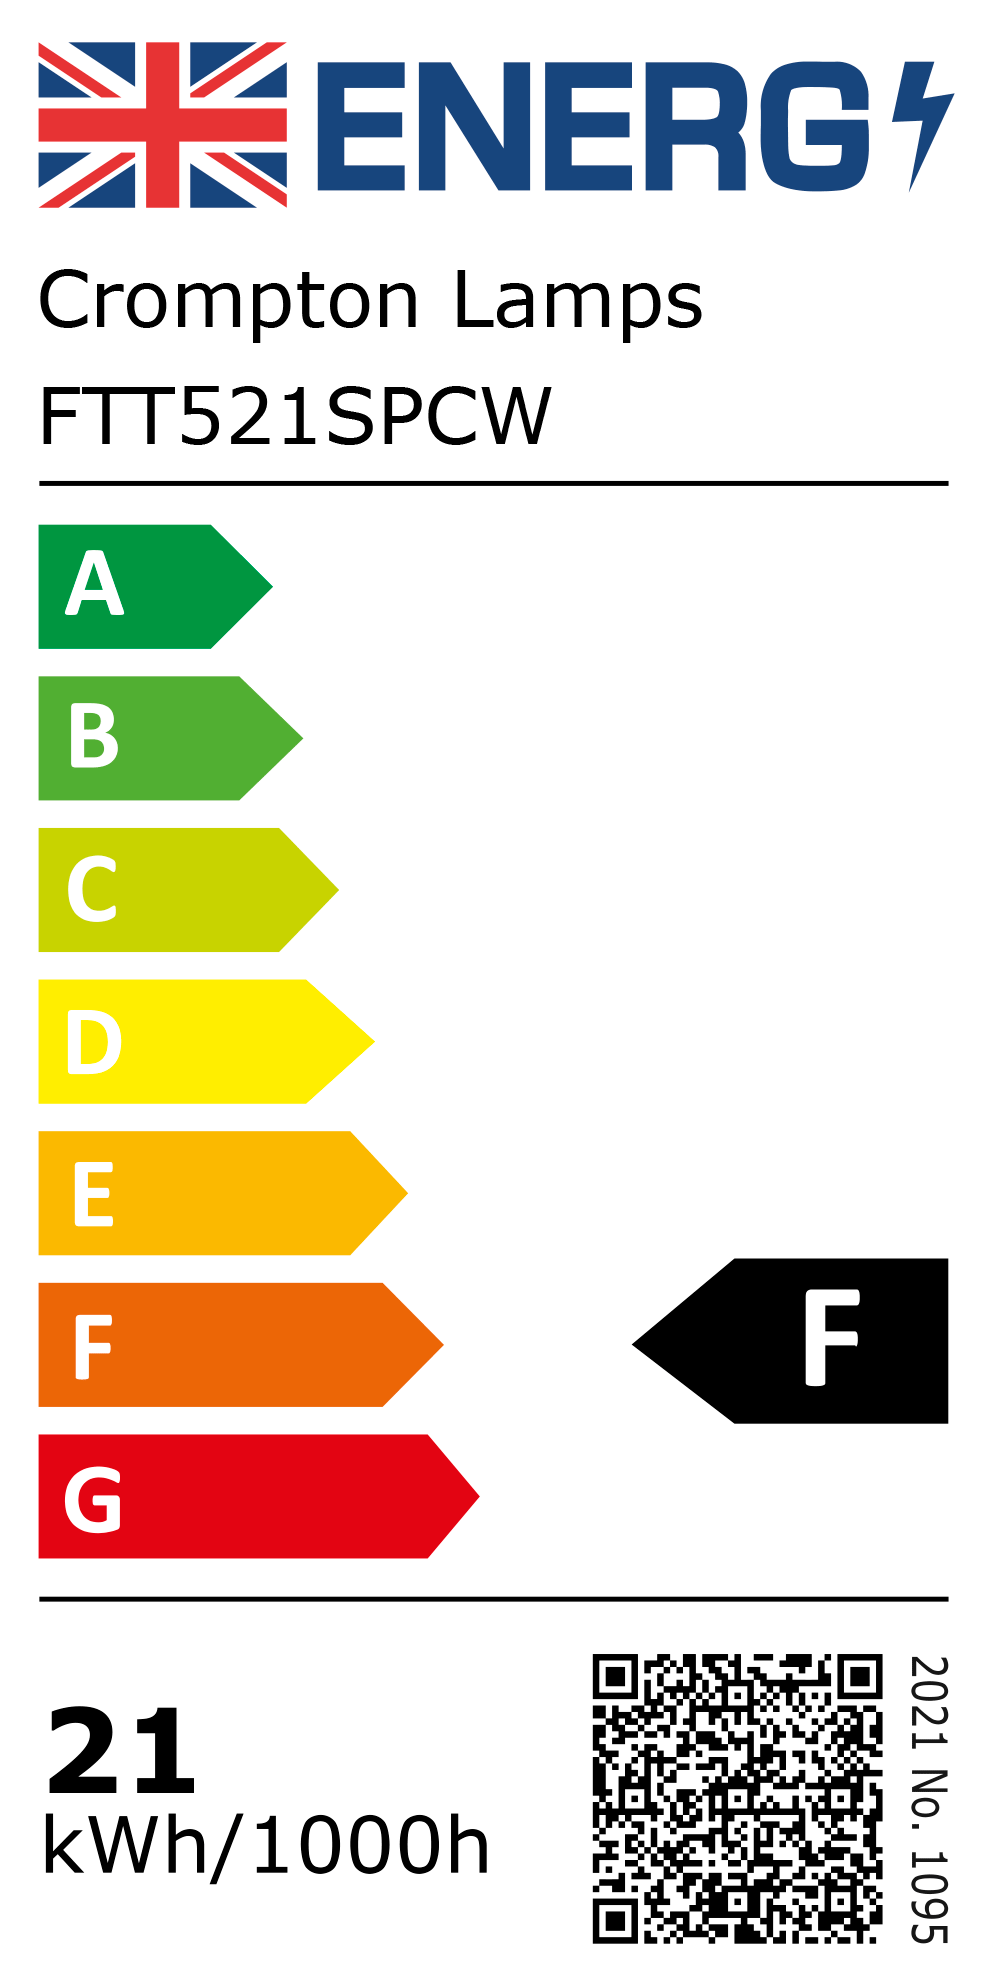 New 2021 Energy Rating Label: Stock Code FTT521SPCW